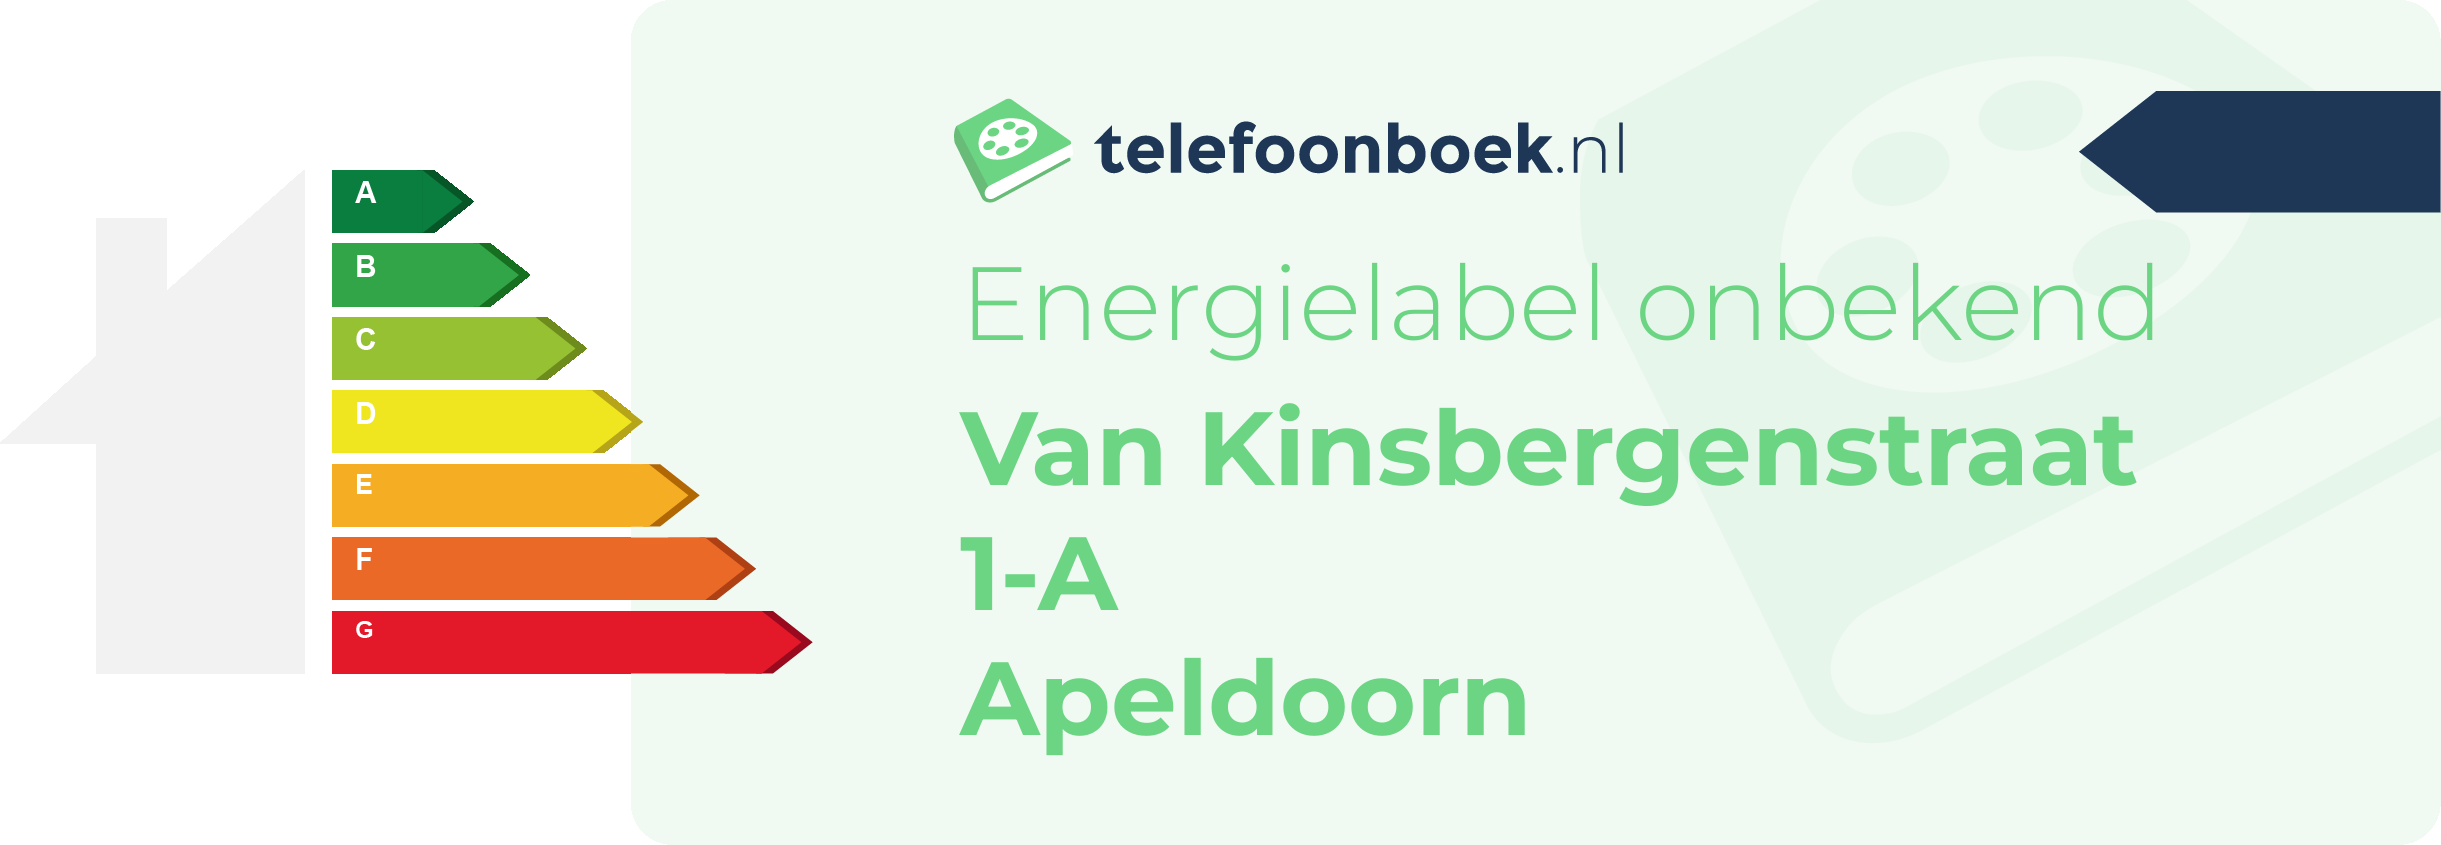 Energielabel Van Kinsbergenstraat 1-A Apeldoorn